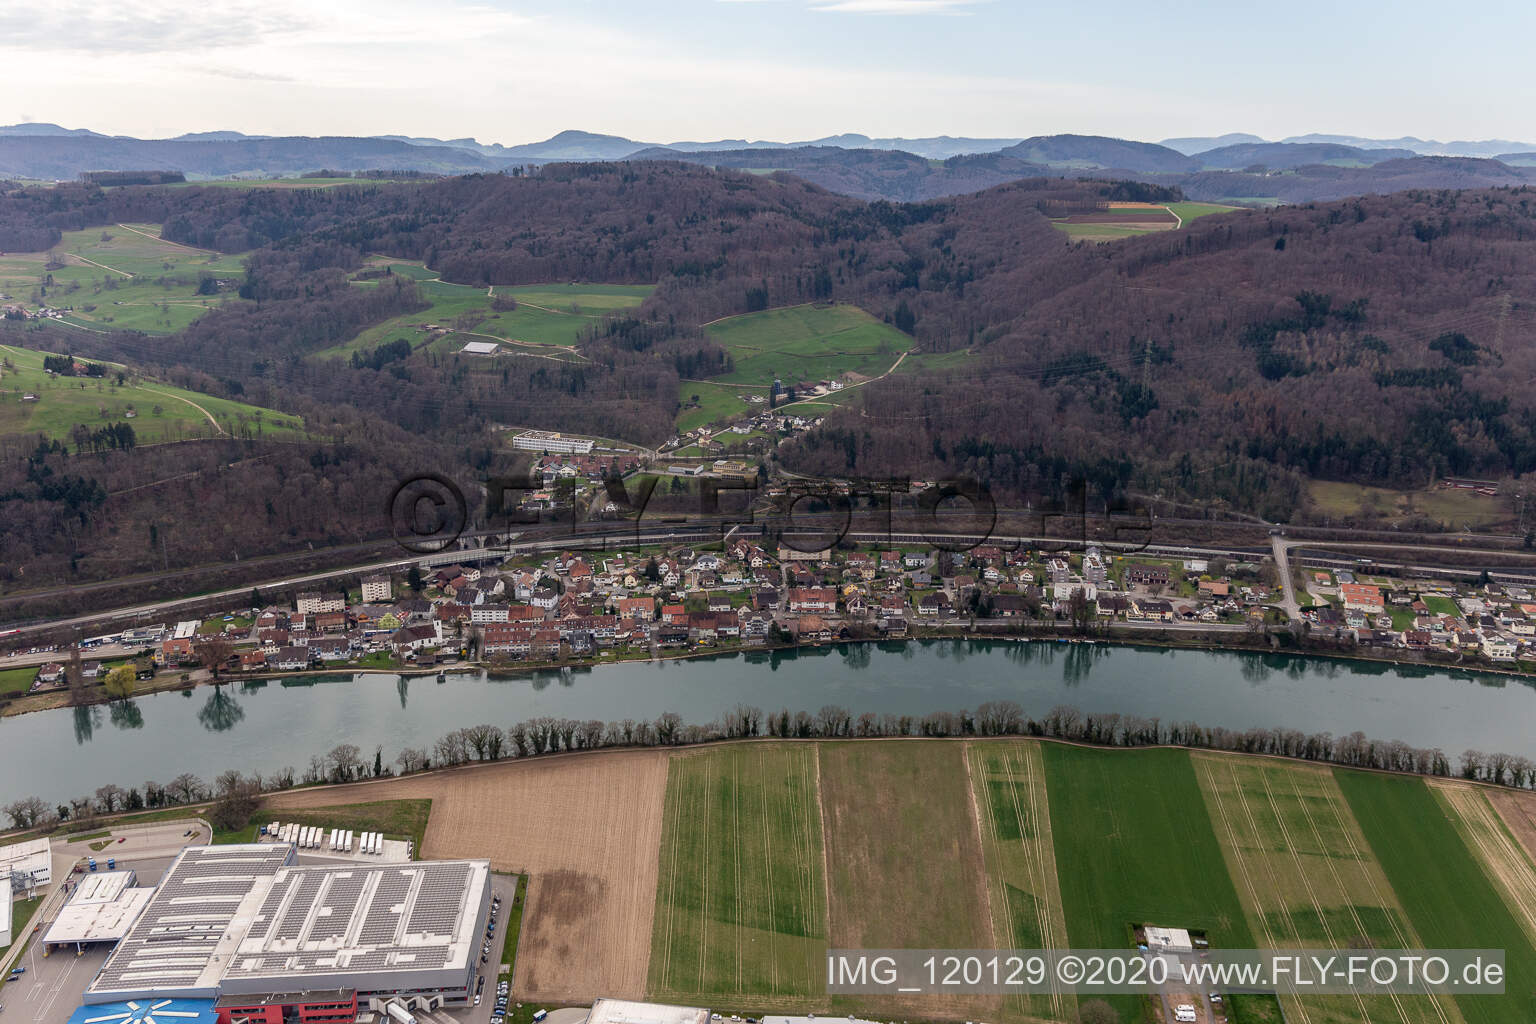 Mumpf in the state Aargau, Switzerland